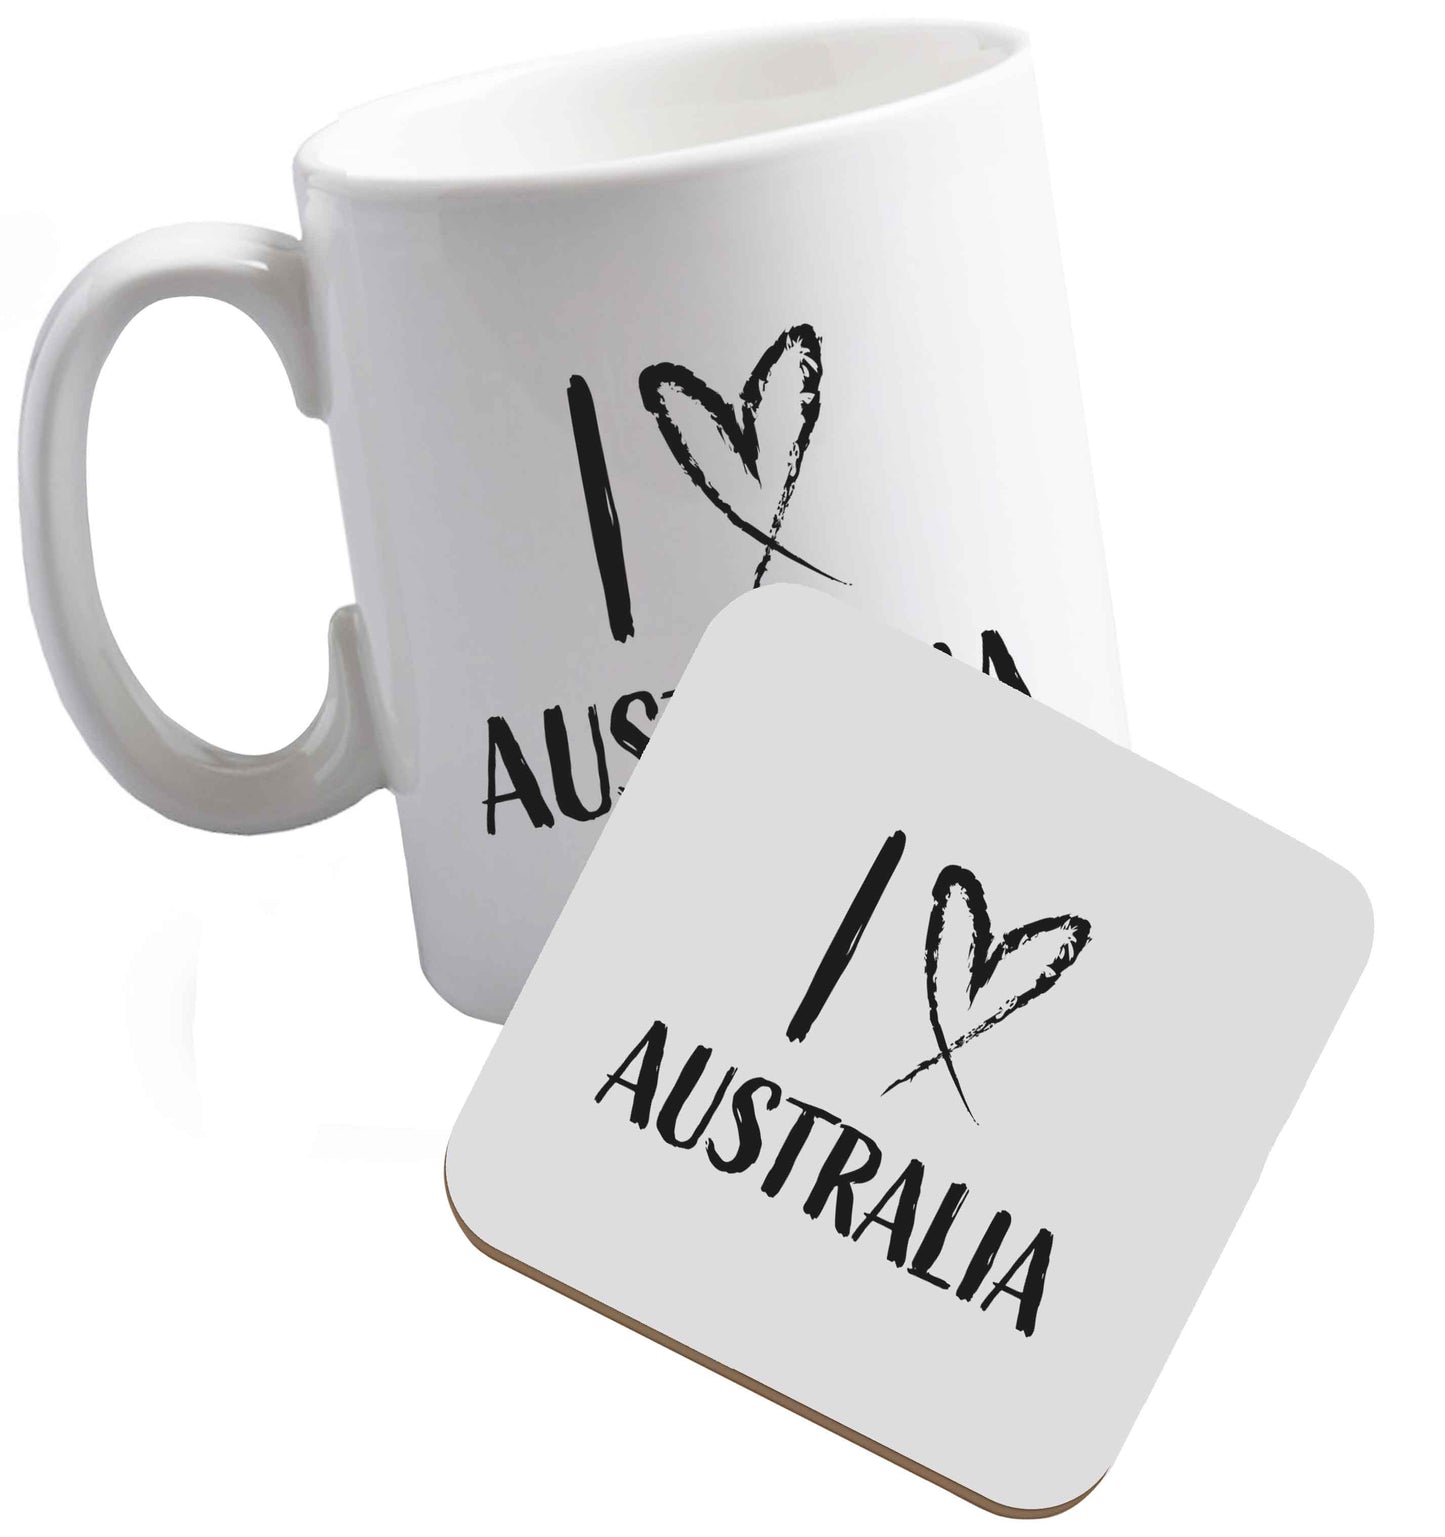 10 oz I Love Australia ceramic mug and coaster set right handed